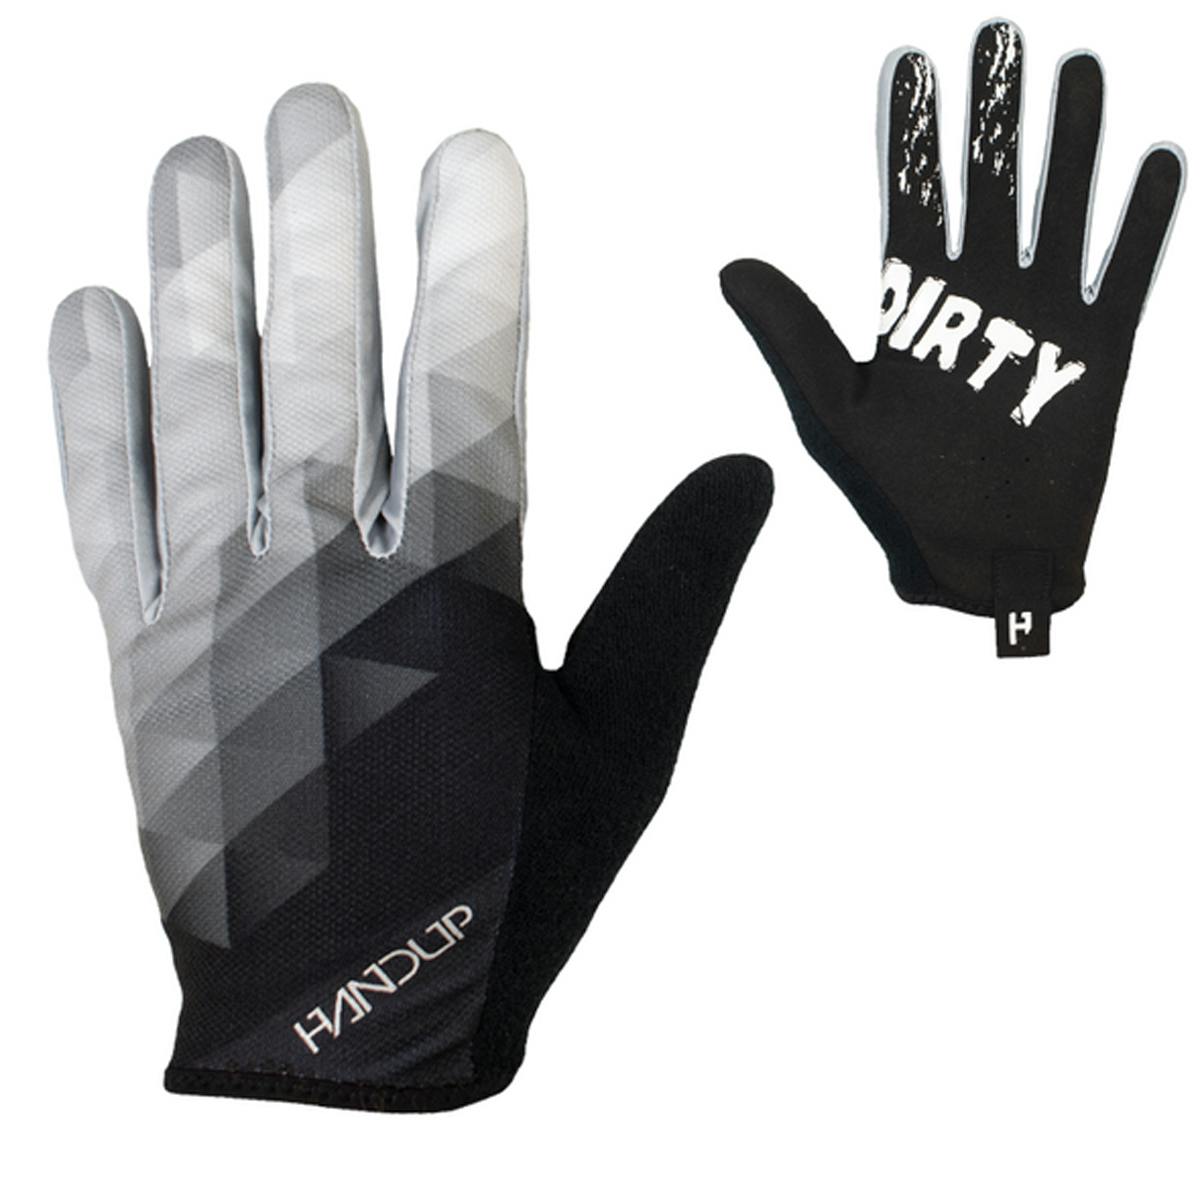 Hand Up Gloves Prizm Bike Gloves - Black / White - Medium